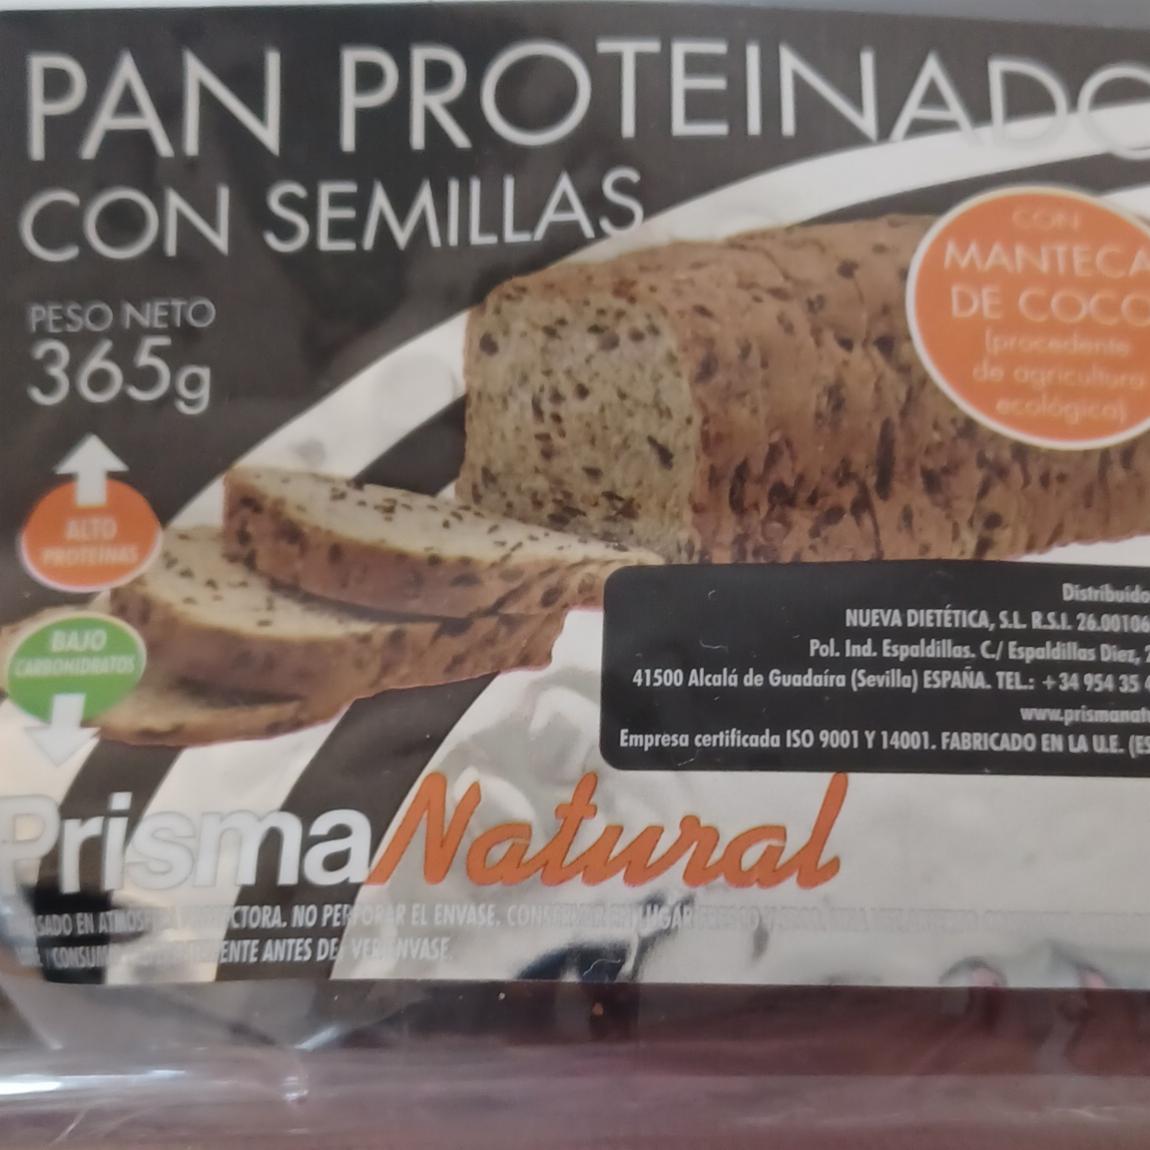 Fotografie - Pan Proteinado con Semillas Prisma Natural